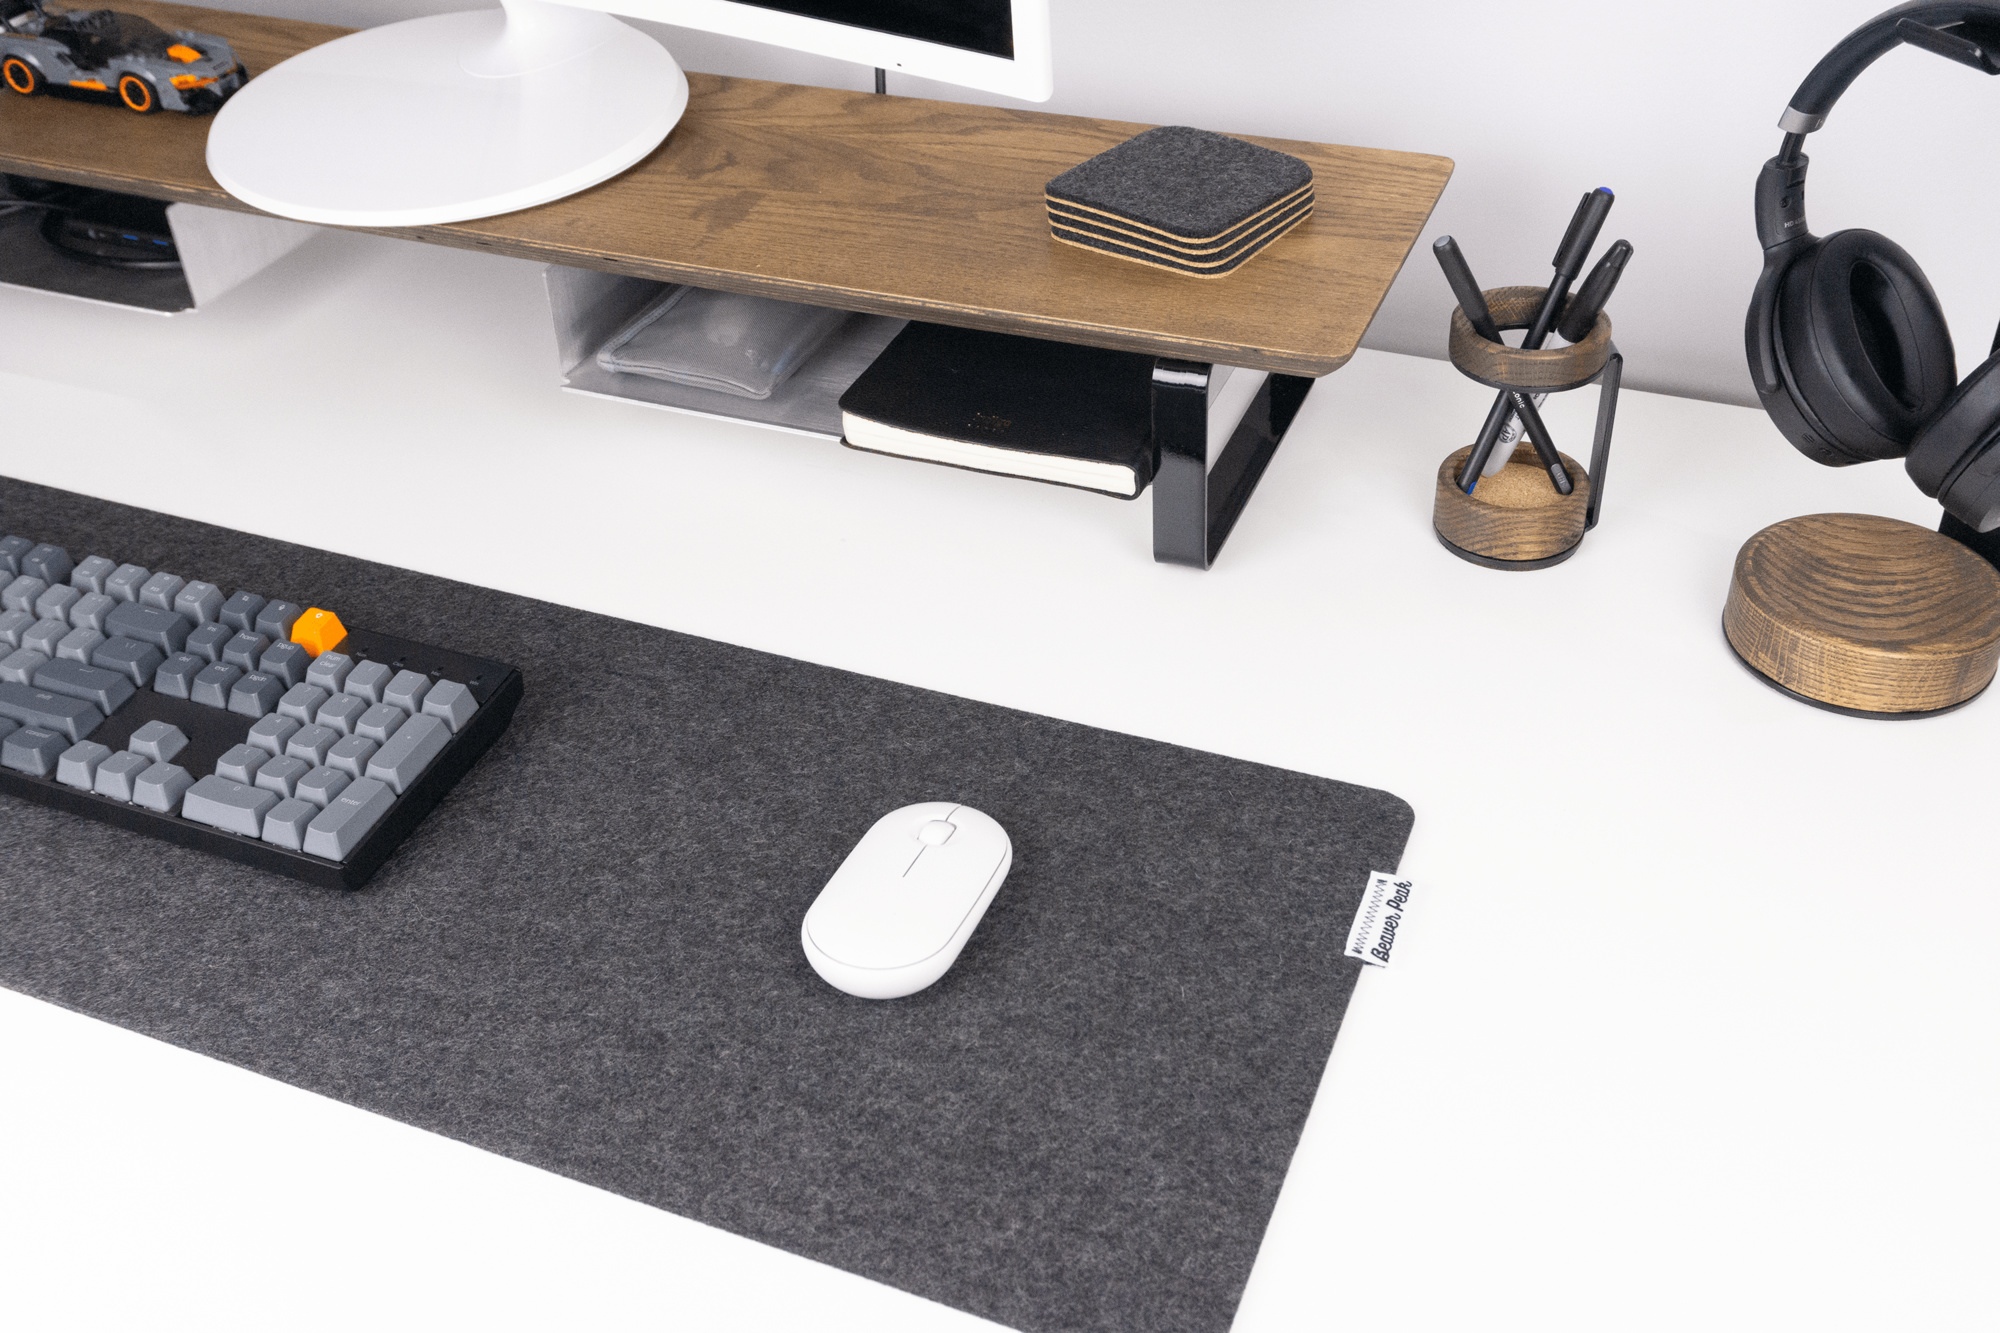 Black wool desk mat with walnut desk shelf, pen stand, and headphone stand.